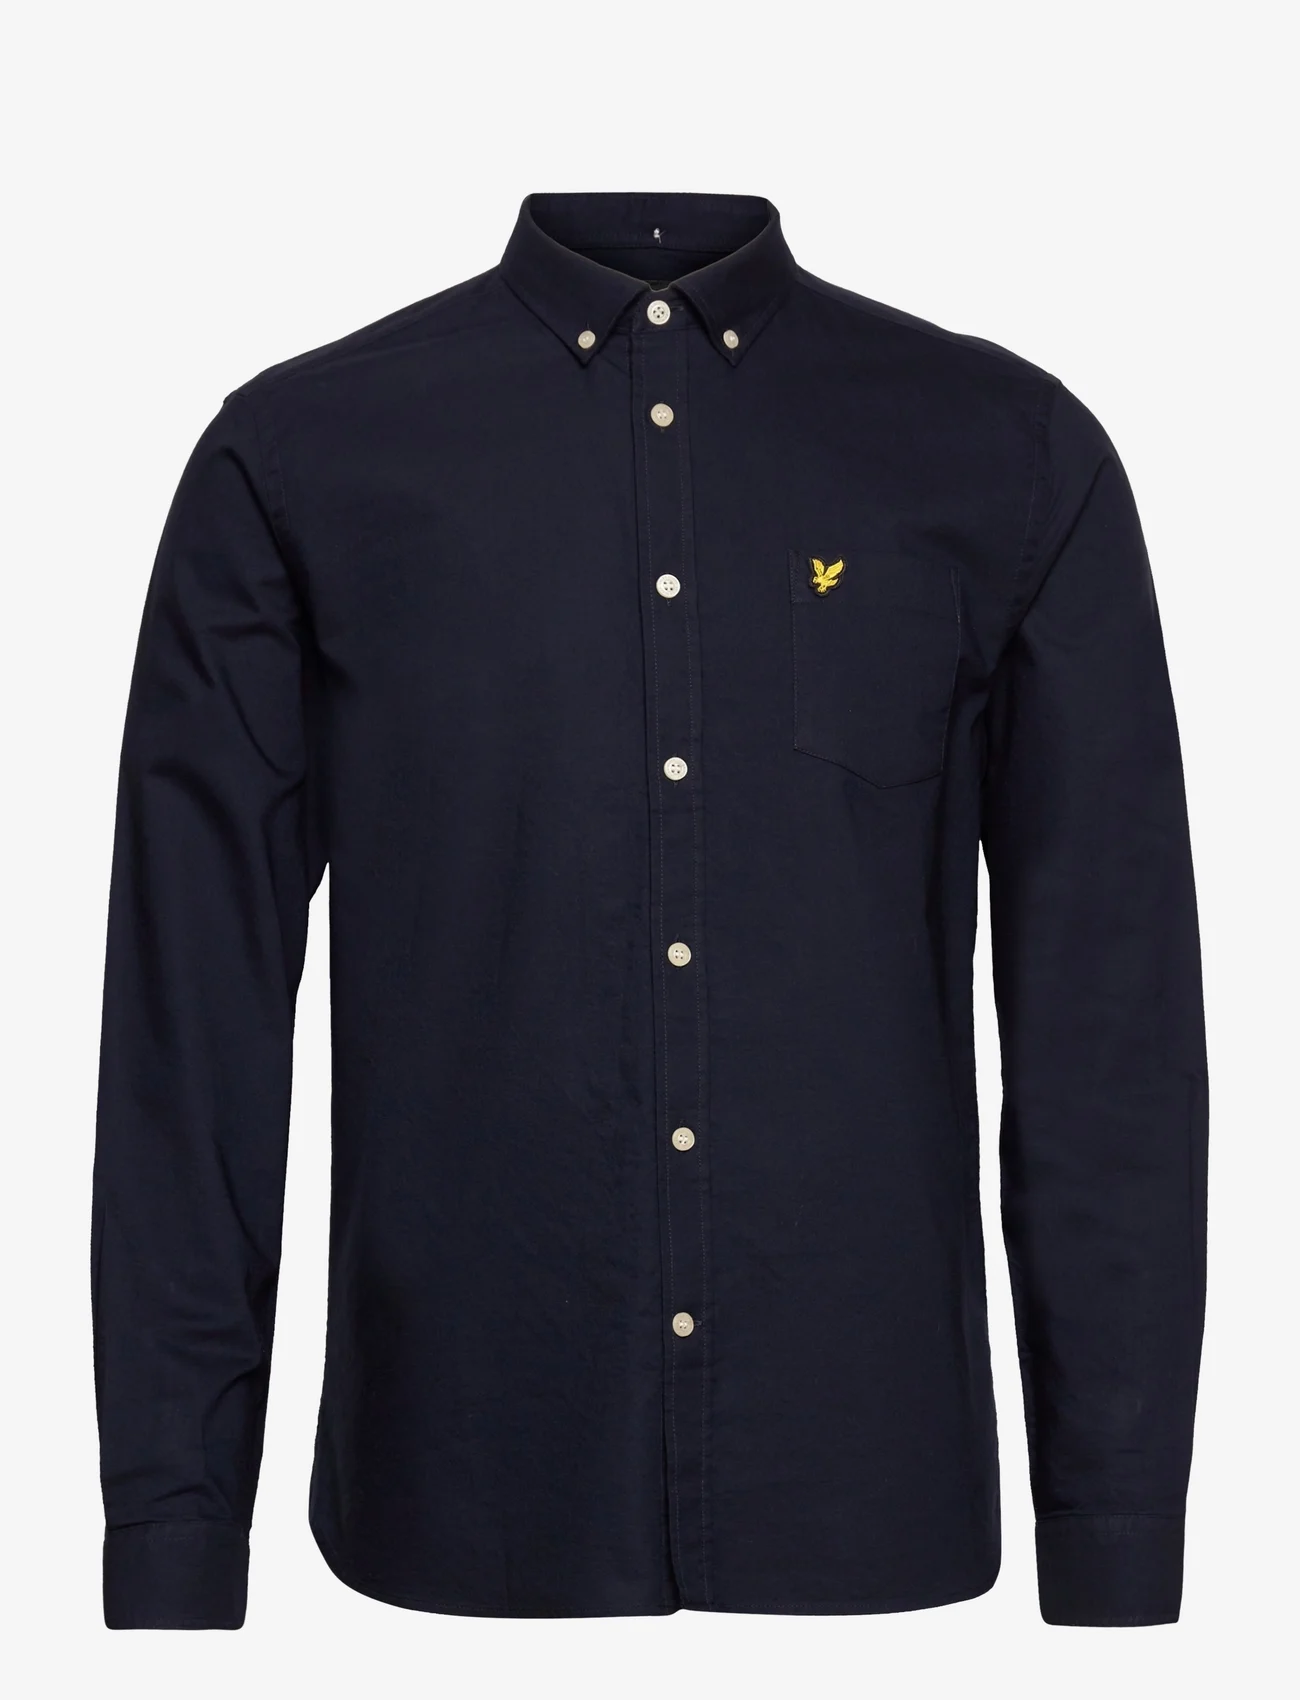 Lyle & Scott - Regular Fit Light Weight Oxford Shirt - oxford-skjortor - dark navy - 0